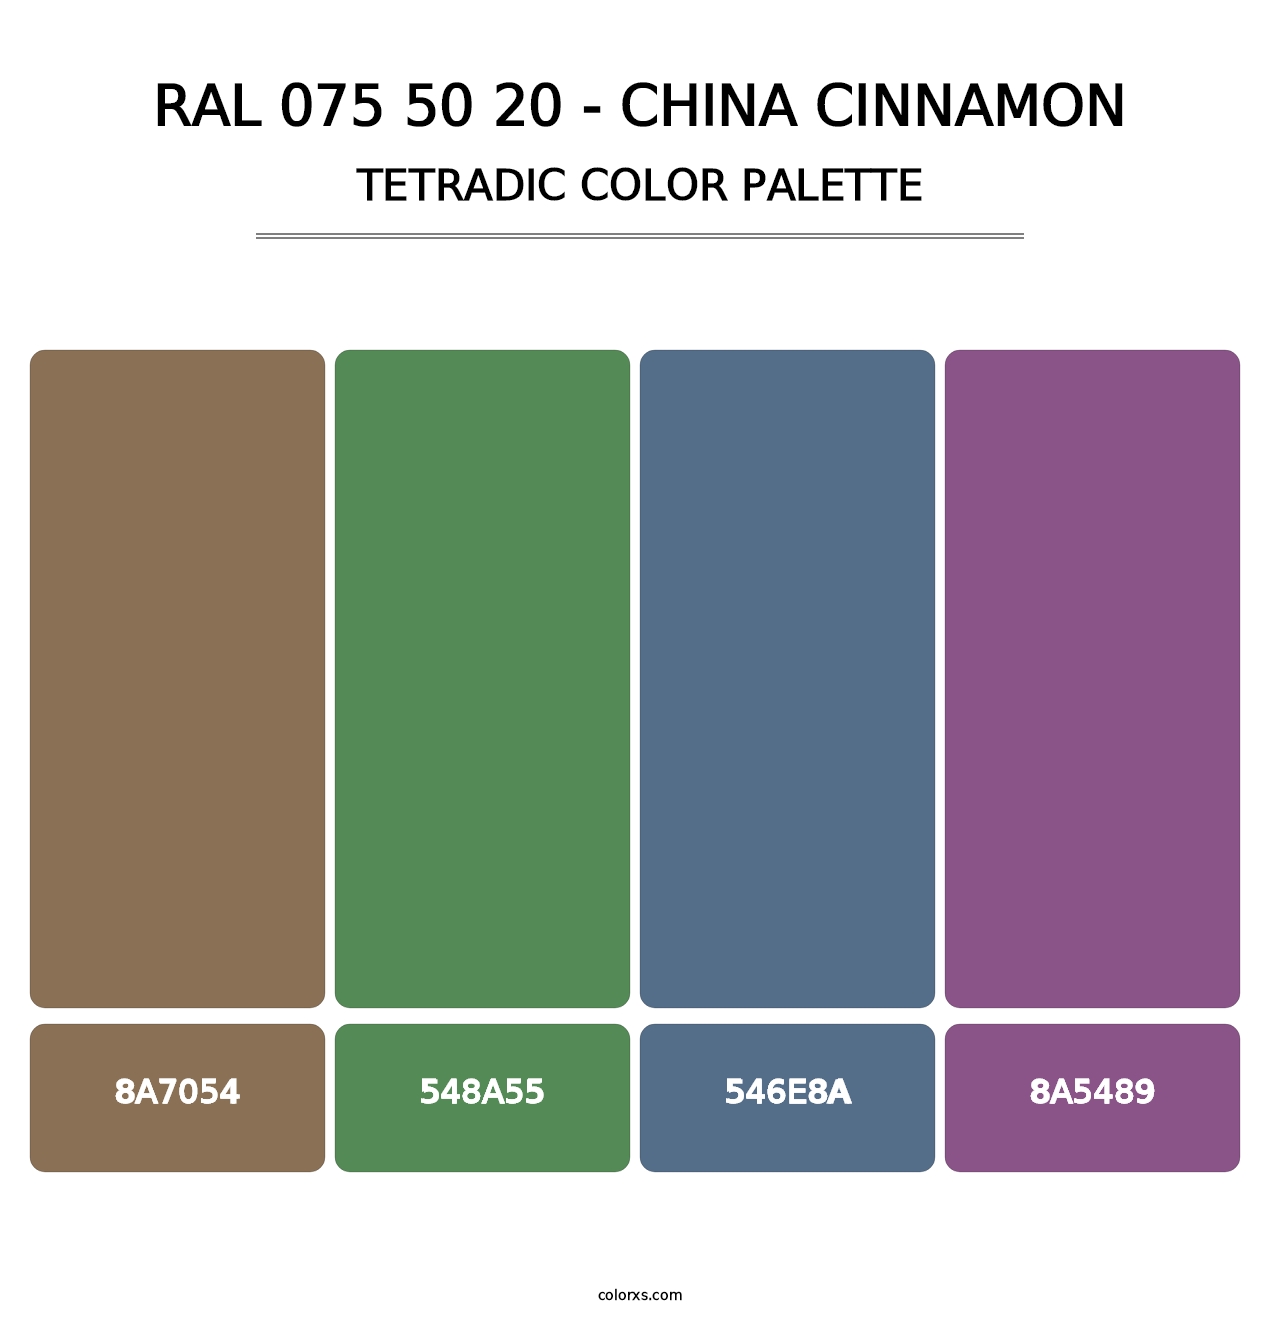 RAL 075 50 20 - China Cinnamon - Tetradic Color Palette